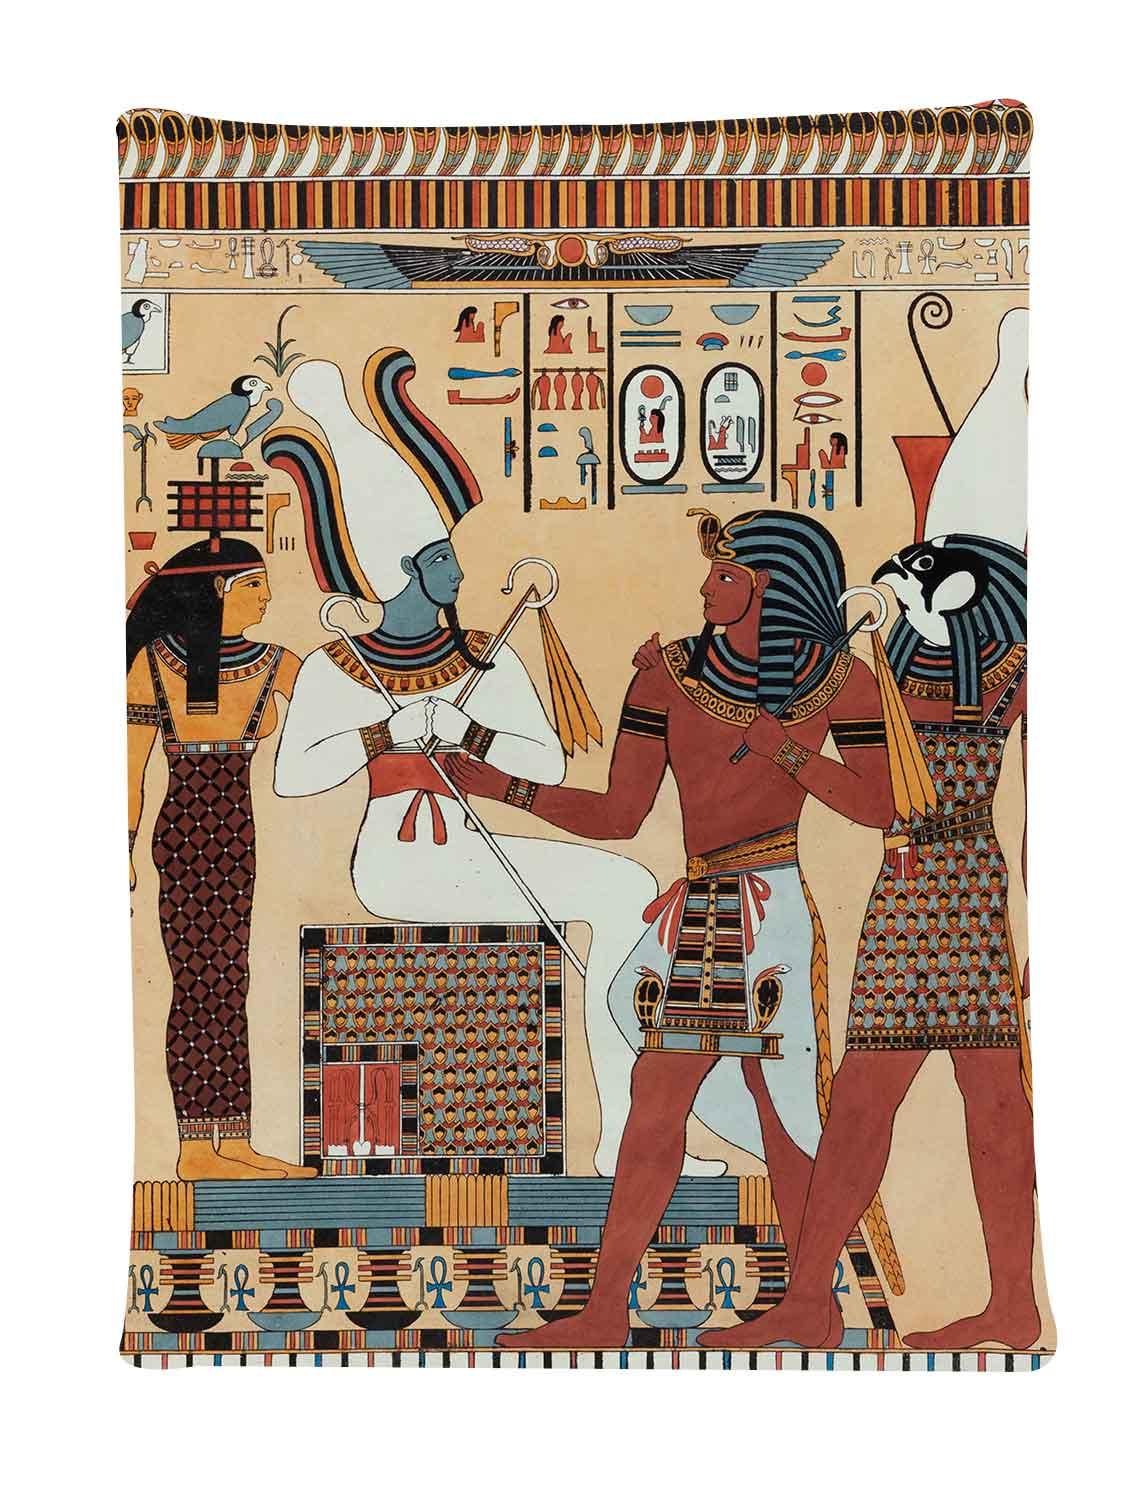 Simsant Moon Dreamcatcher Tapestry Ancient Egypt Mythology Art Wall Hanging Tapestries for Living Room Home Dorm Decor